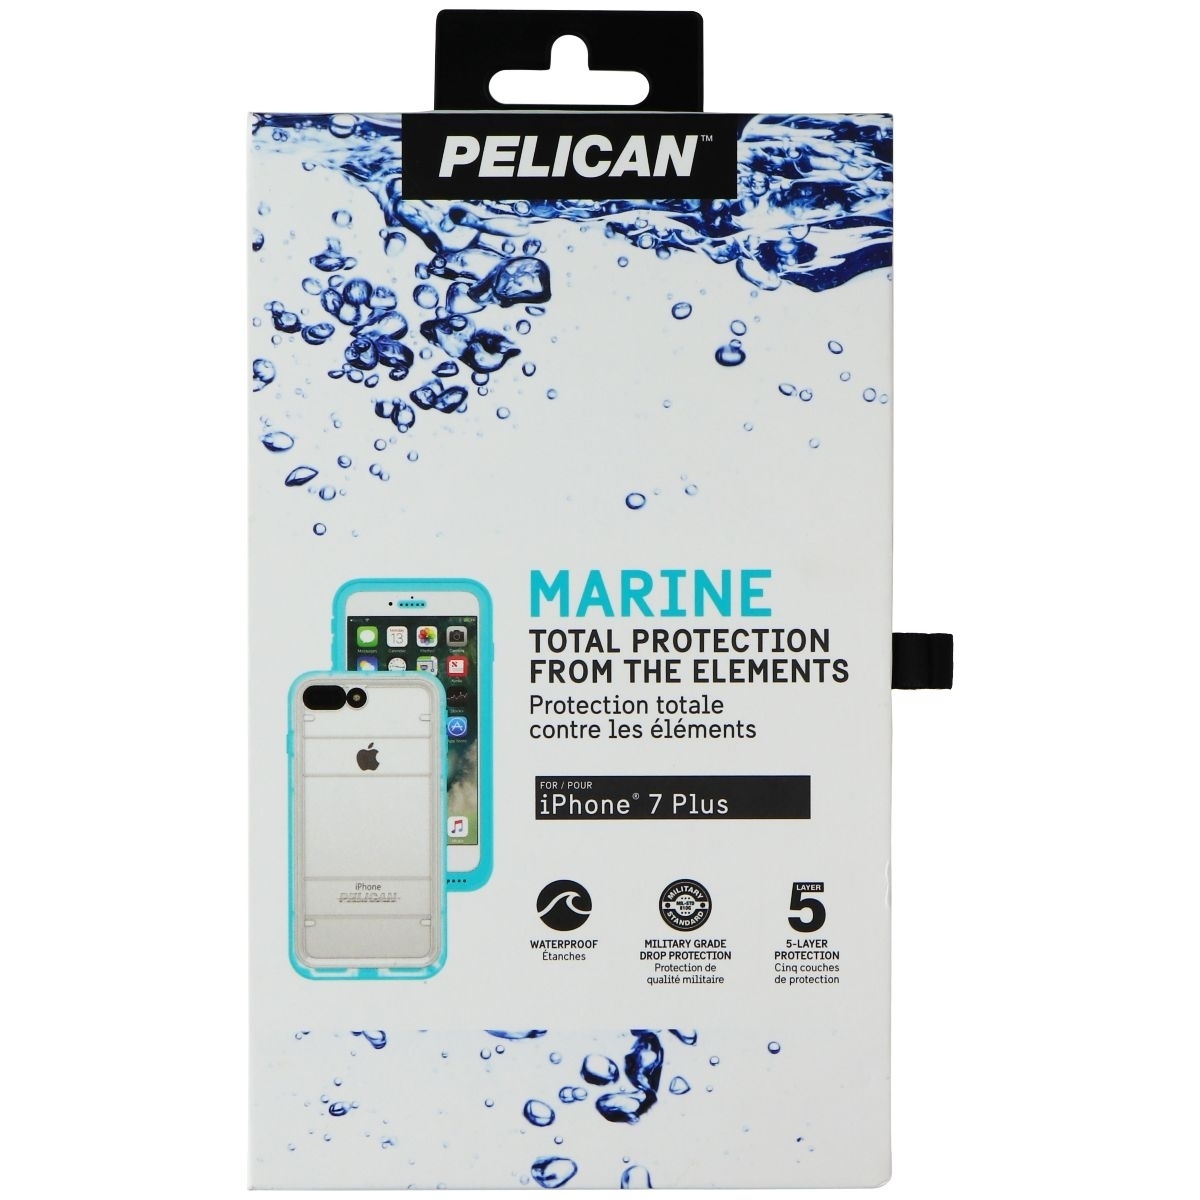 Pelican Marine Total Protection Waterproof Case For IPhone 7 Plus - Teal (Refurbished)